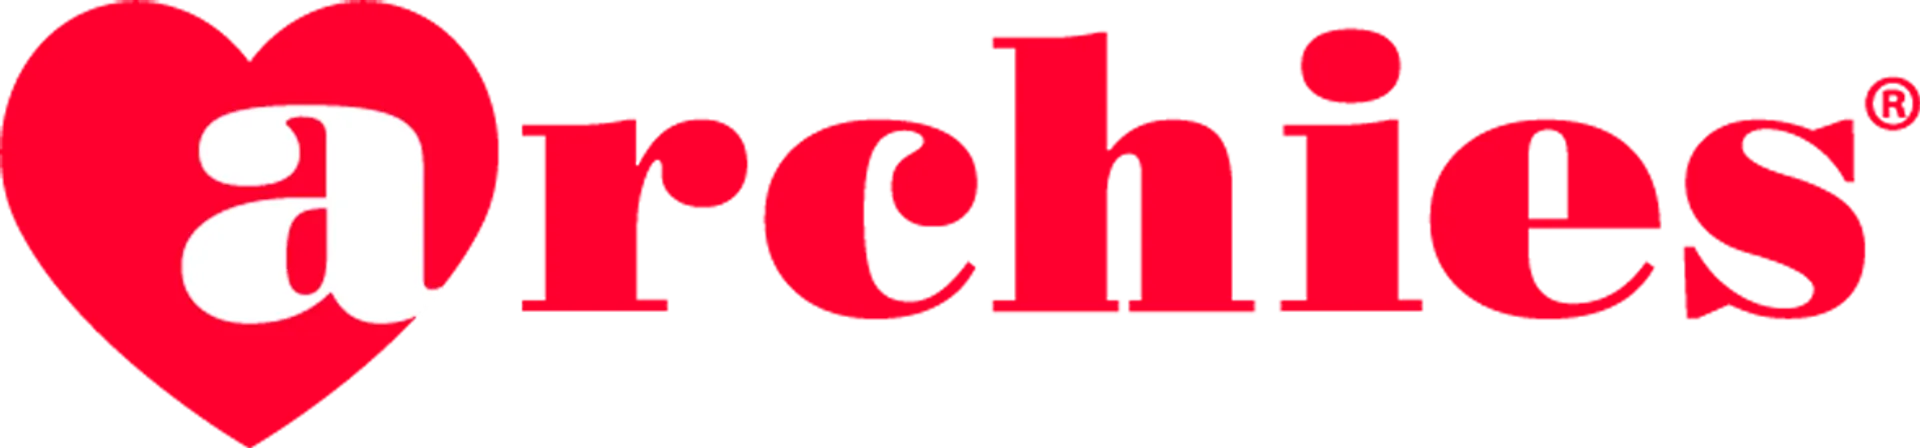 ARCHIES logo. Current catalogue